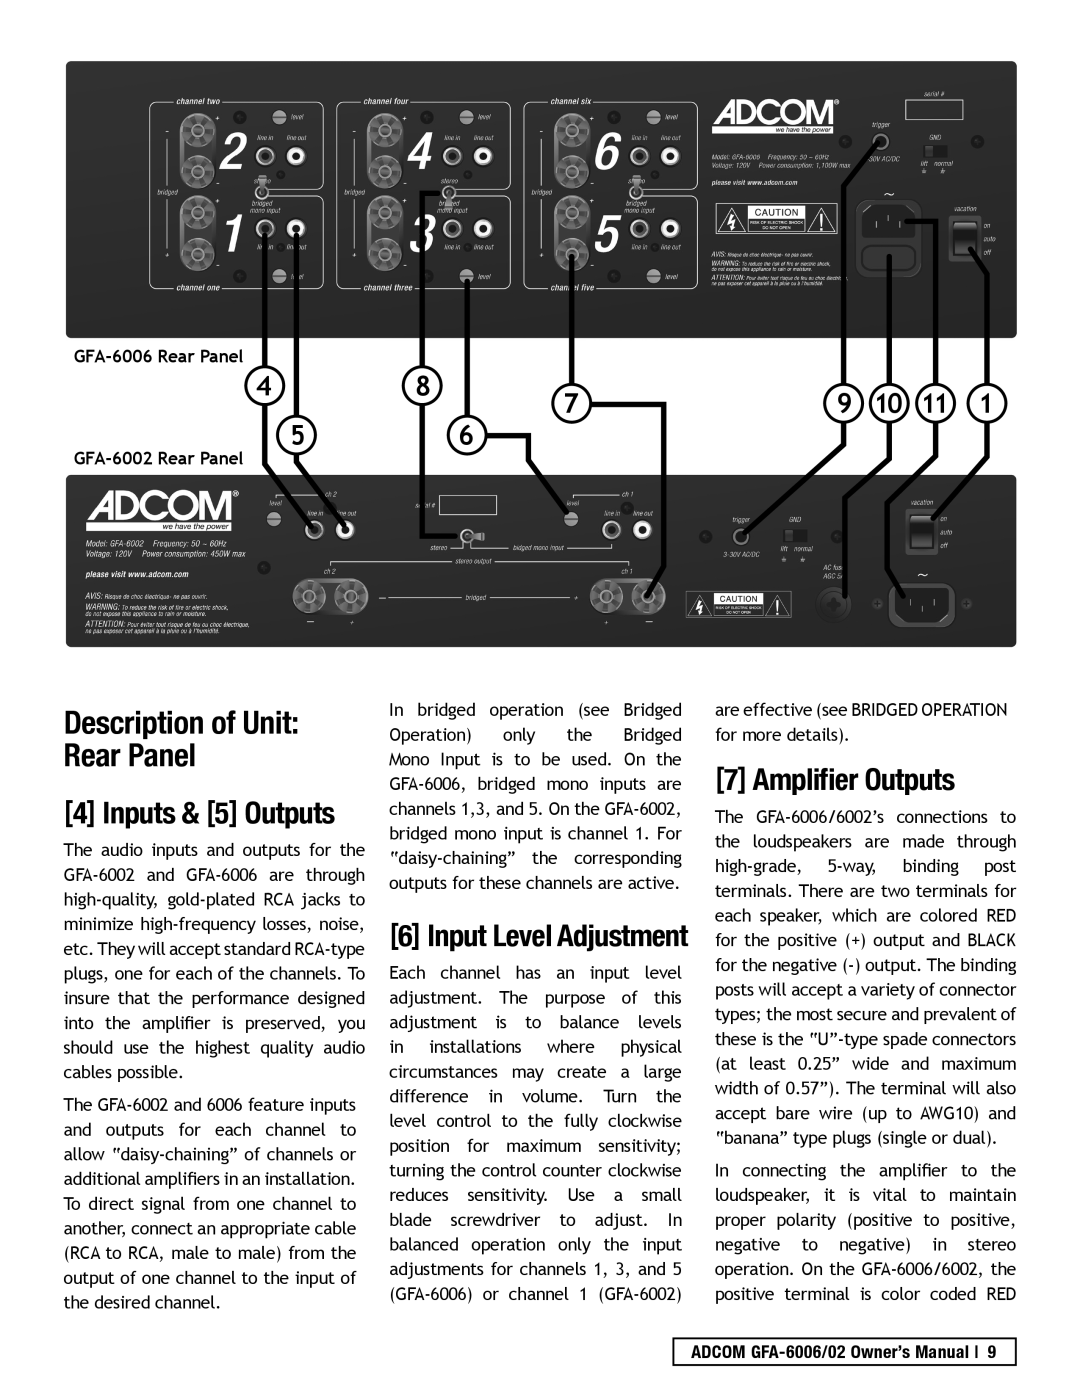 Adcom GFA-6006, GFA-6002 Description of Unit Rear Panel, Amplifier Outputs, Inputs & 5 Outputs, Input Level Adjustment 